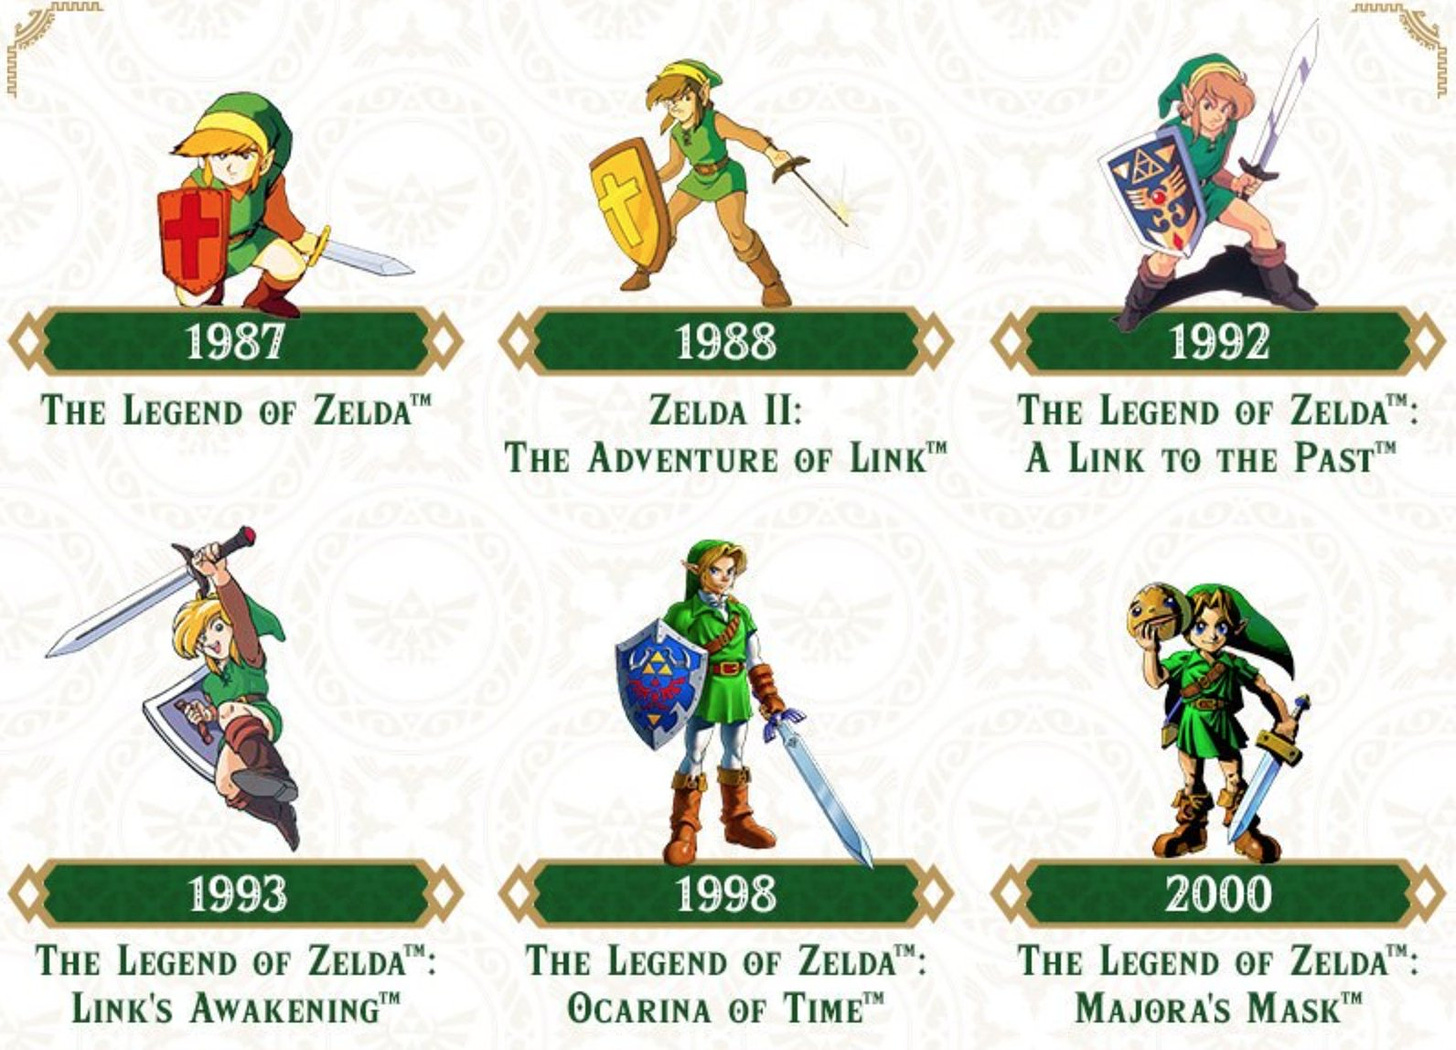 THE ART OF VIDEO GAMES on Twitter: "The Legend of Zelda | Evolution of Link  https://t.co/M9IwdcFCFP" / Twitter